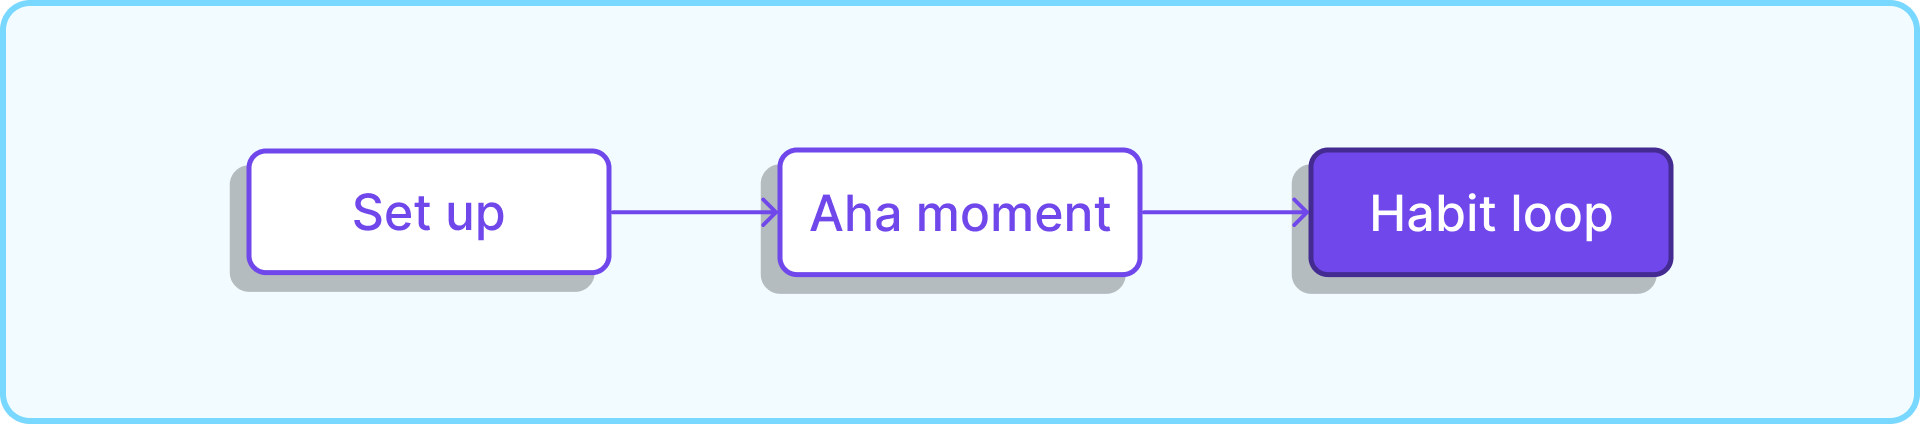 Habit loop moment diagram